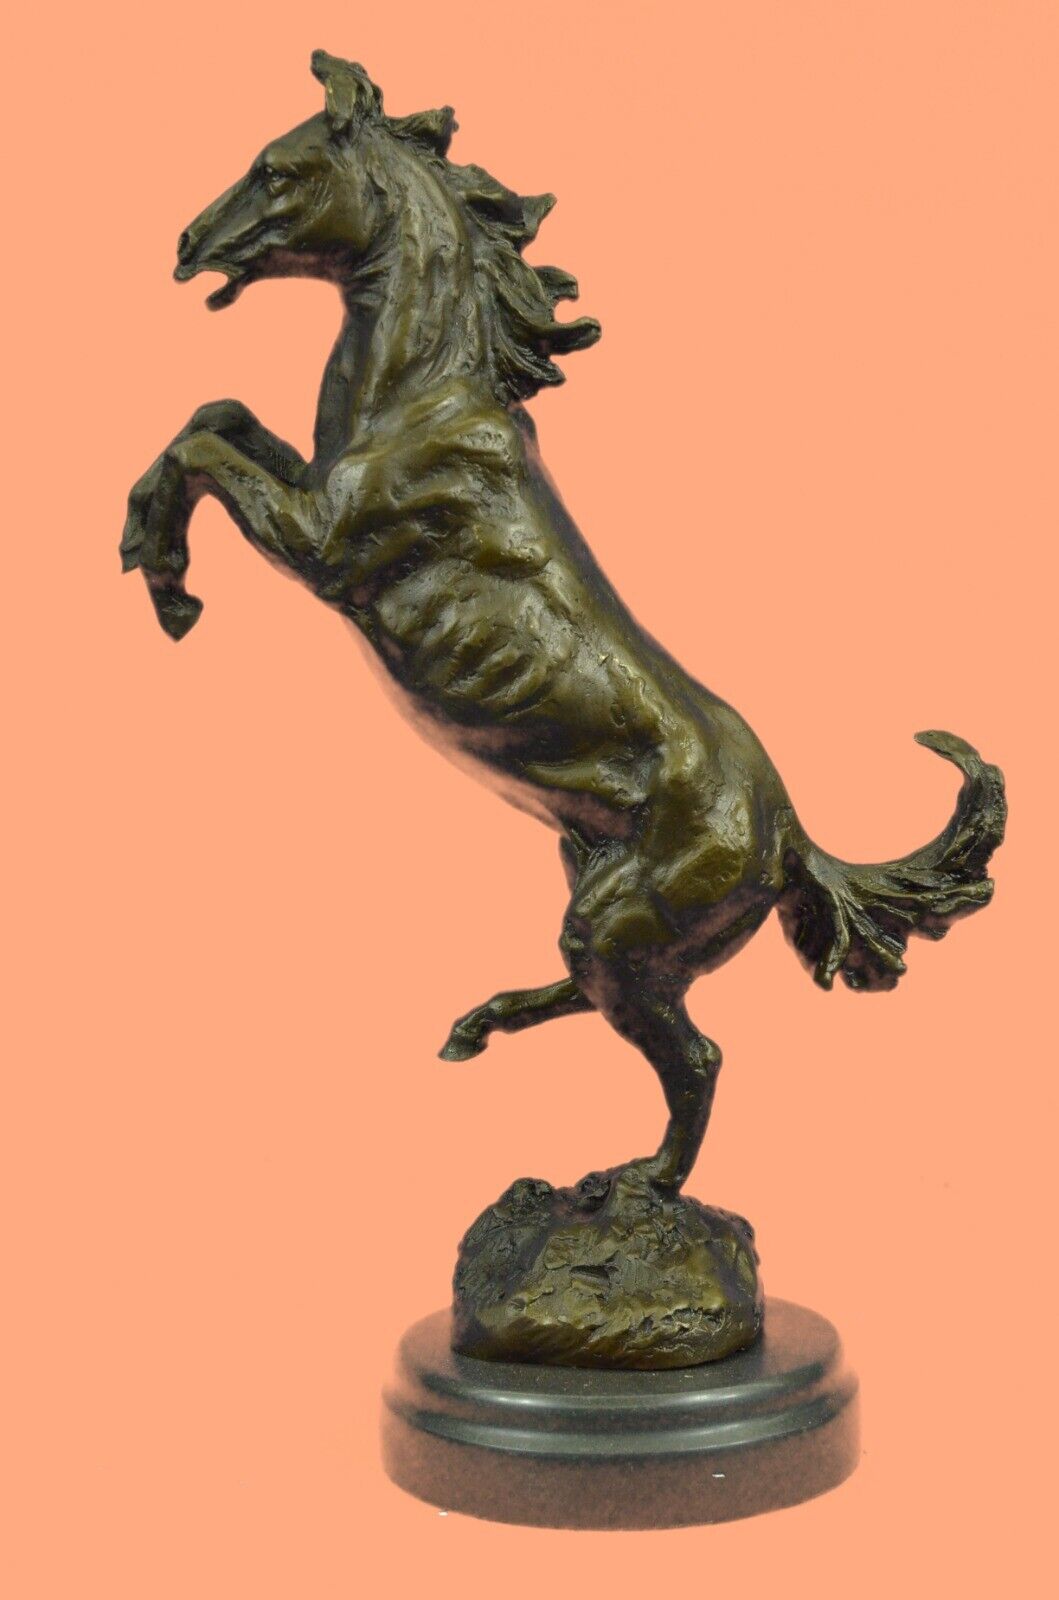 Vintage Rearing Horse English Saddle Bronze Sculpture Figurine Statue Decor GIFT